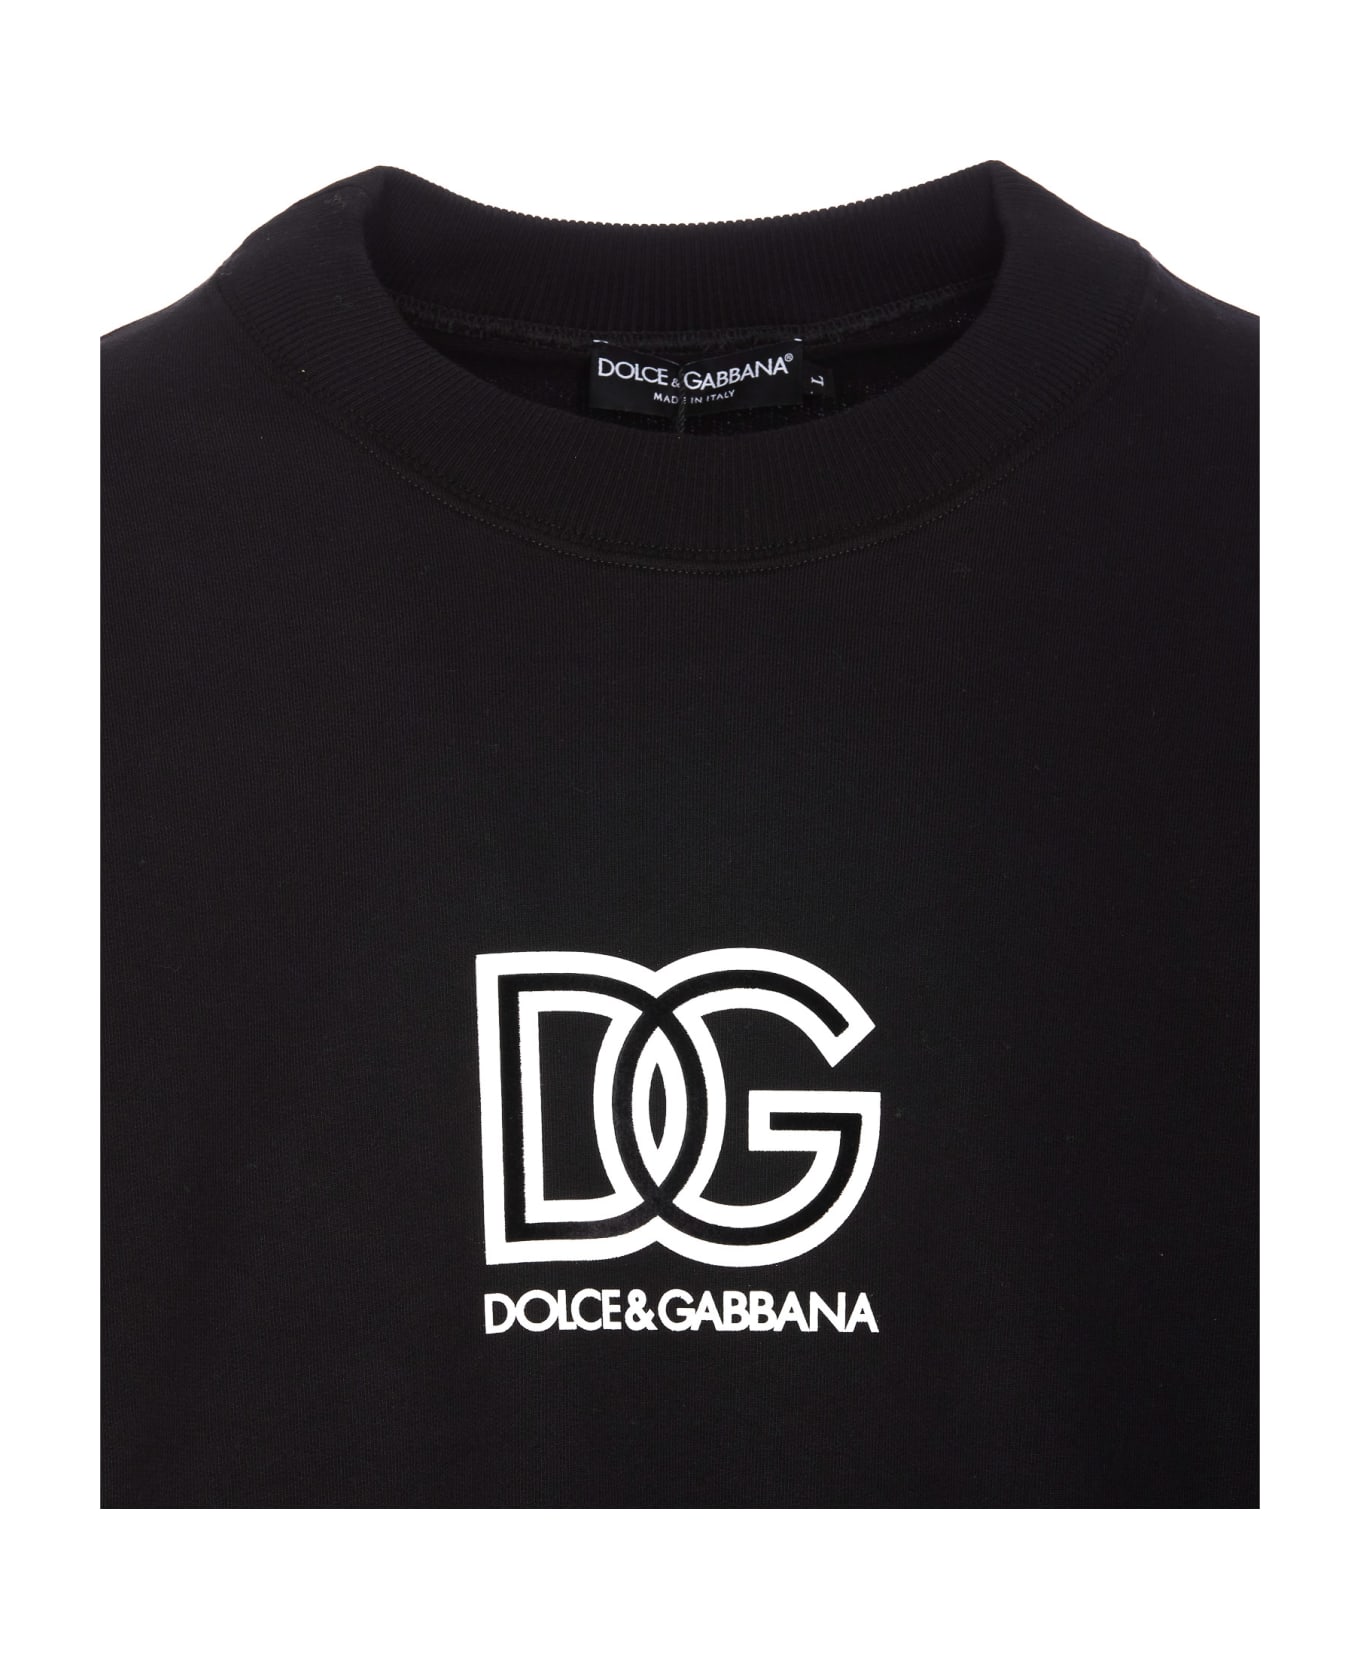 Dolce plaque & Gabbana Dg Logo Printed Crewneck Sweatshirt - Black